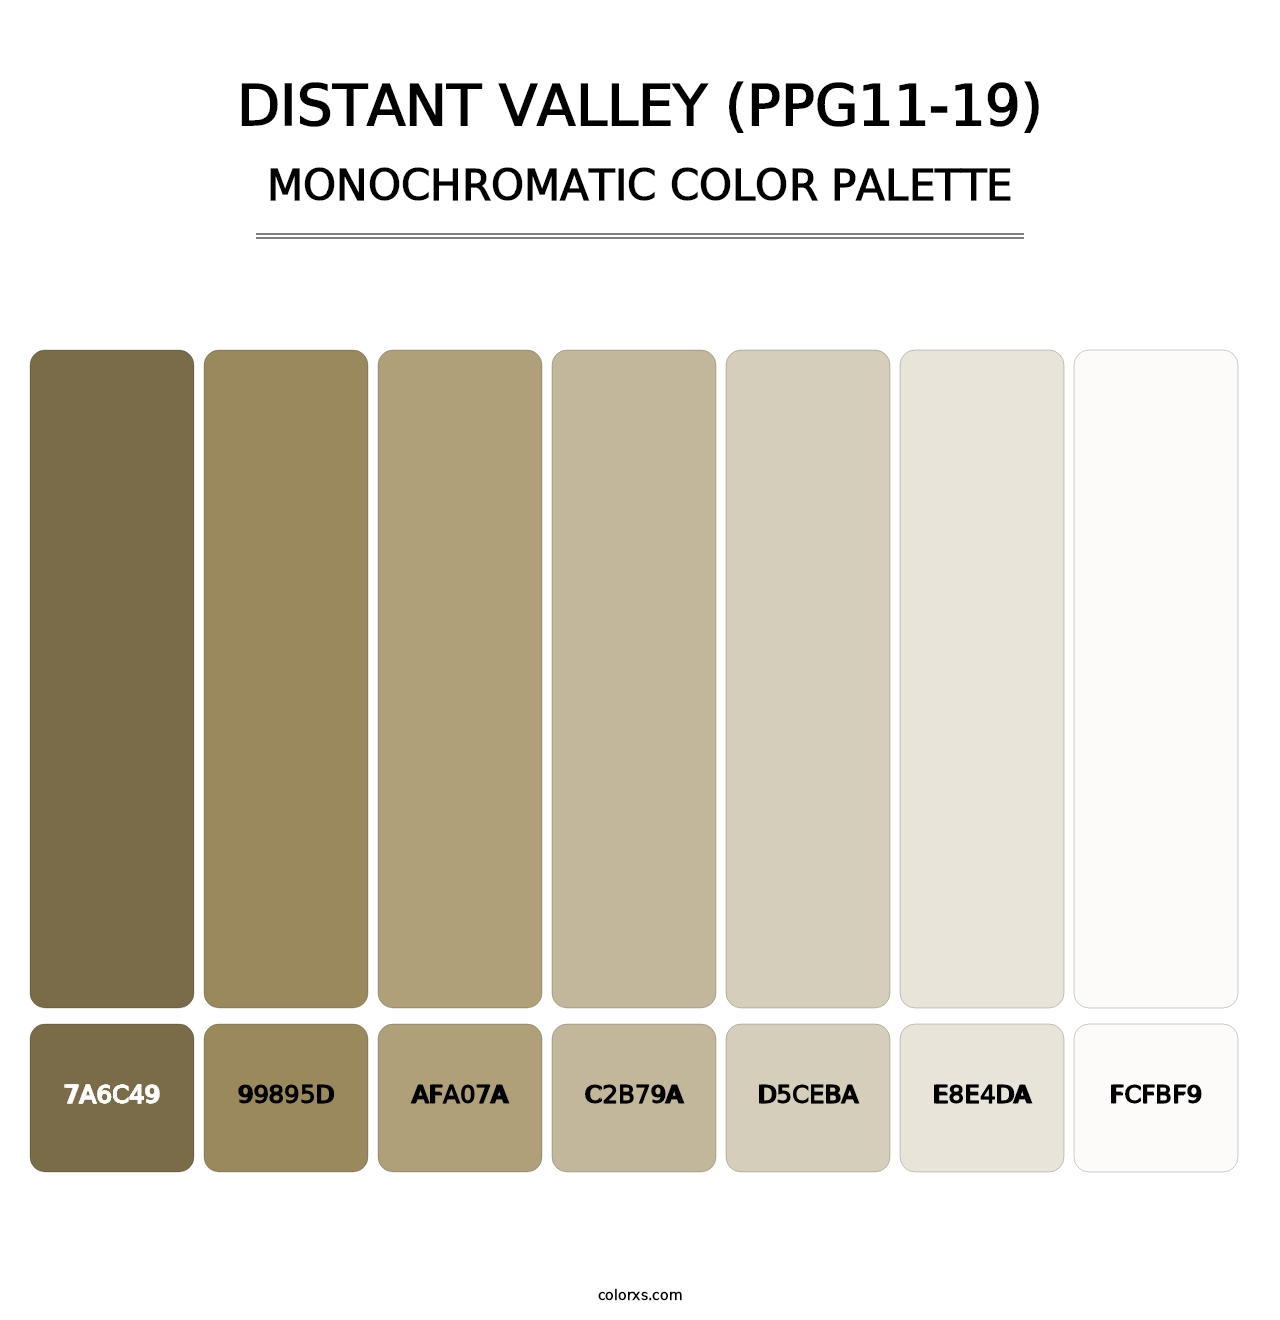 Distant Valley (PPG11-19) - Monochromatic Color Palette